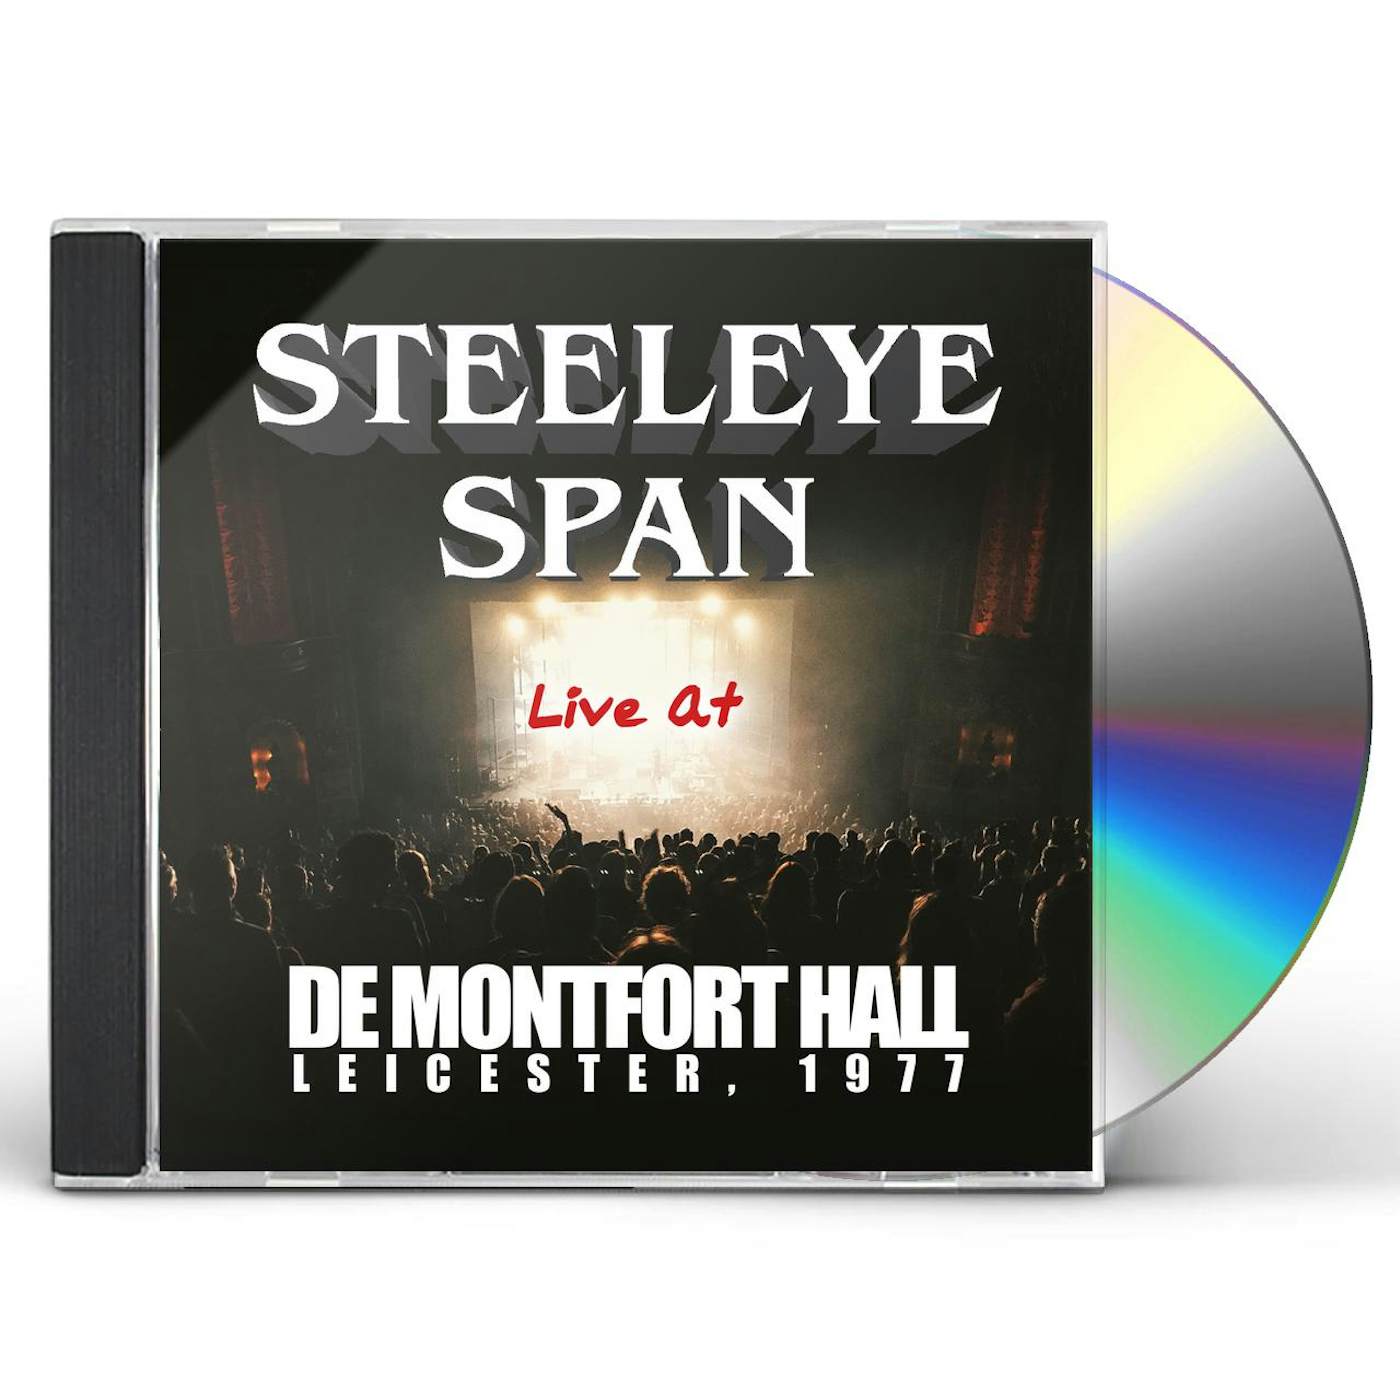 Steeleye Span Live at the de montfort hall 1978 CD